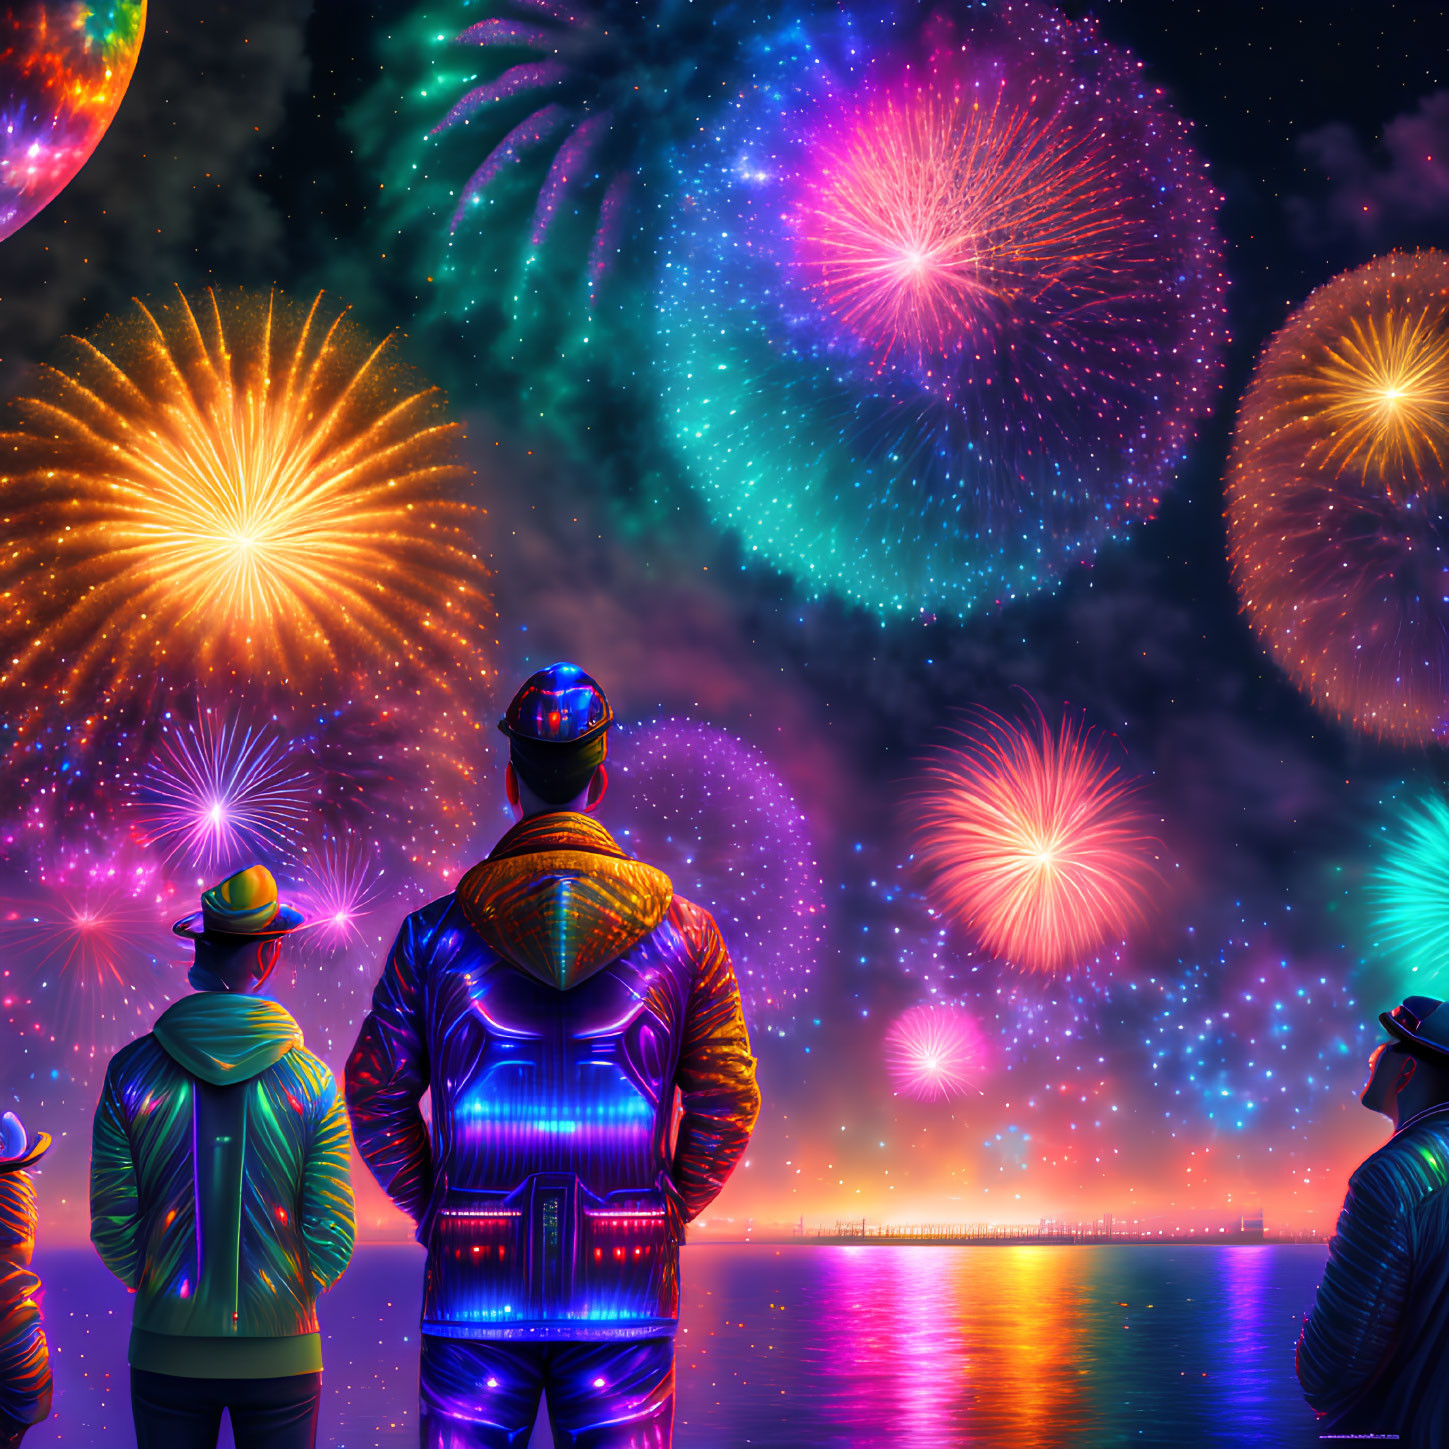 Night Sky: People in Illuminated Clothing Enjoying Vibrant Fireworks Reflecting on Water